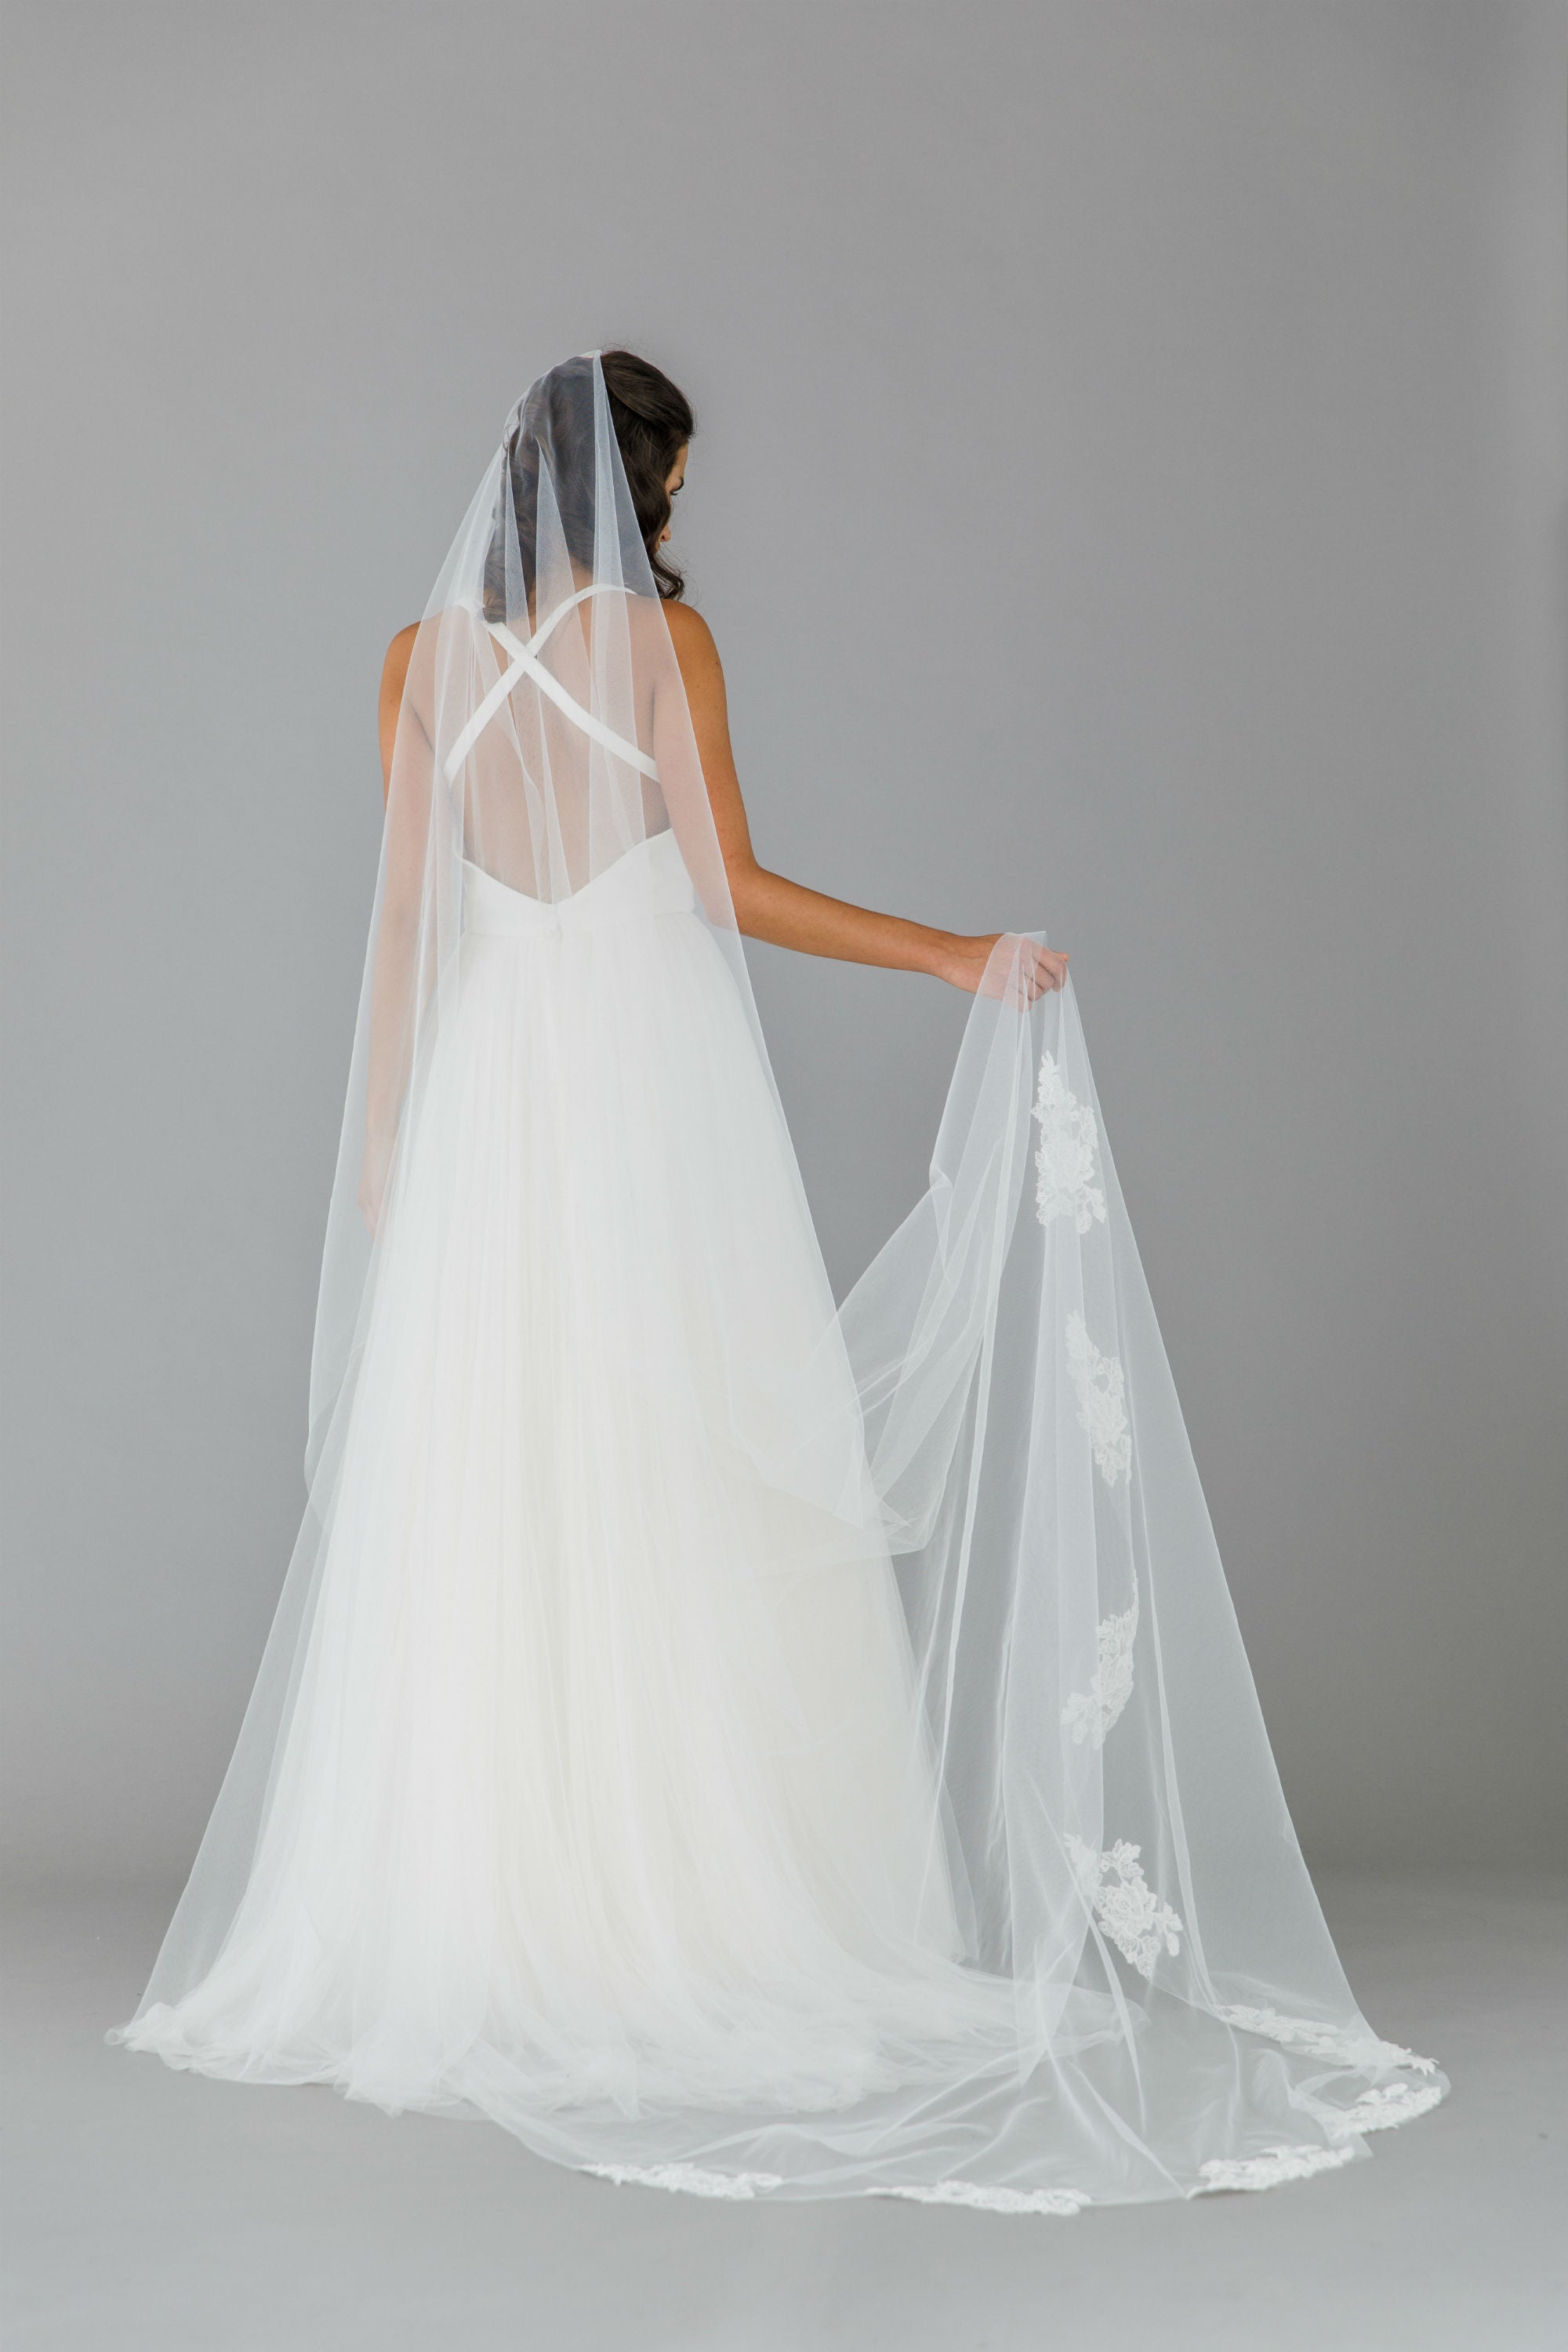 wedding veil FAQs